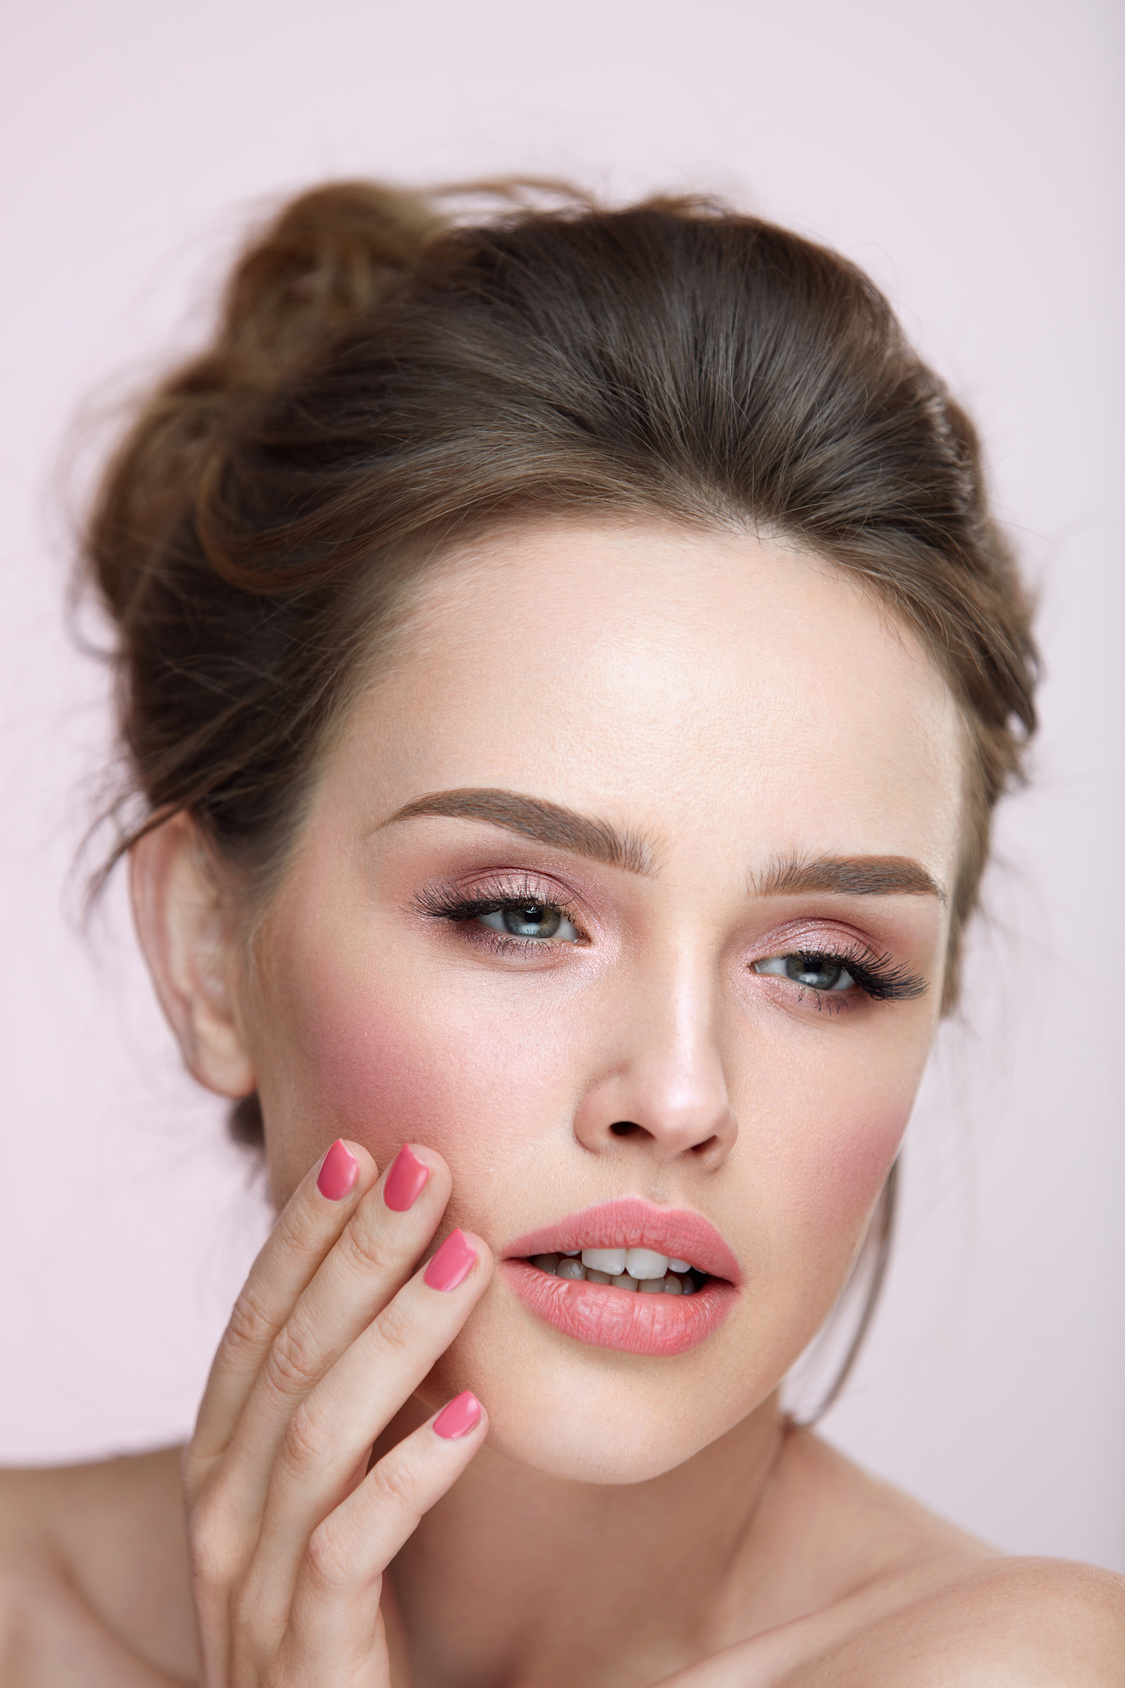 Beauty Makeup. Closeup Female With Natural Makeup And Pink Nails